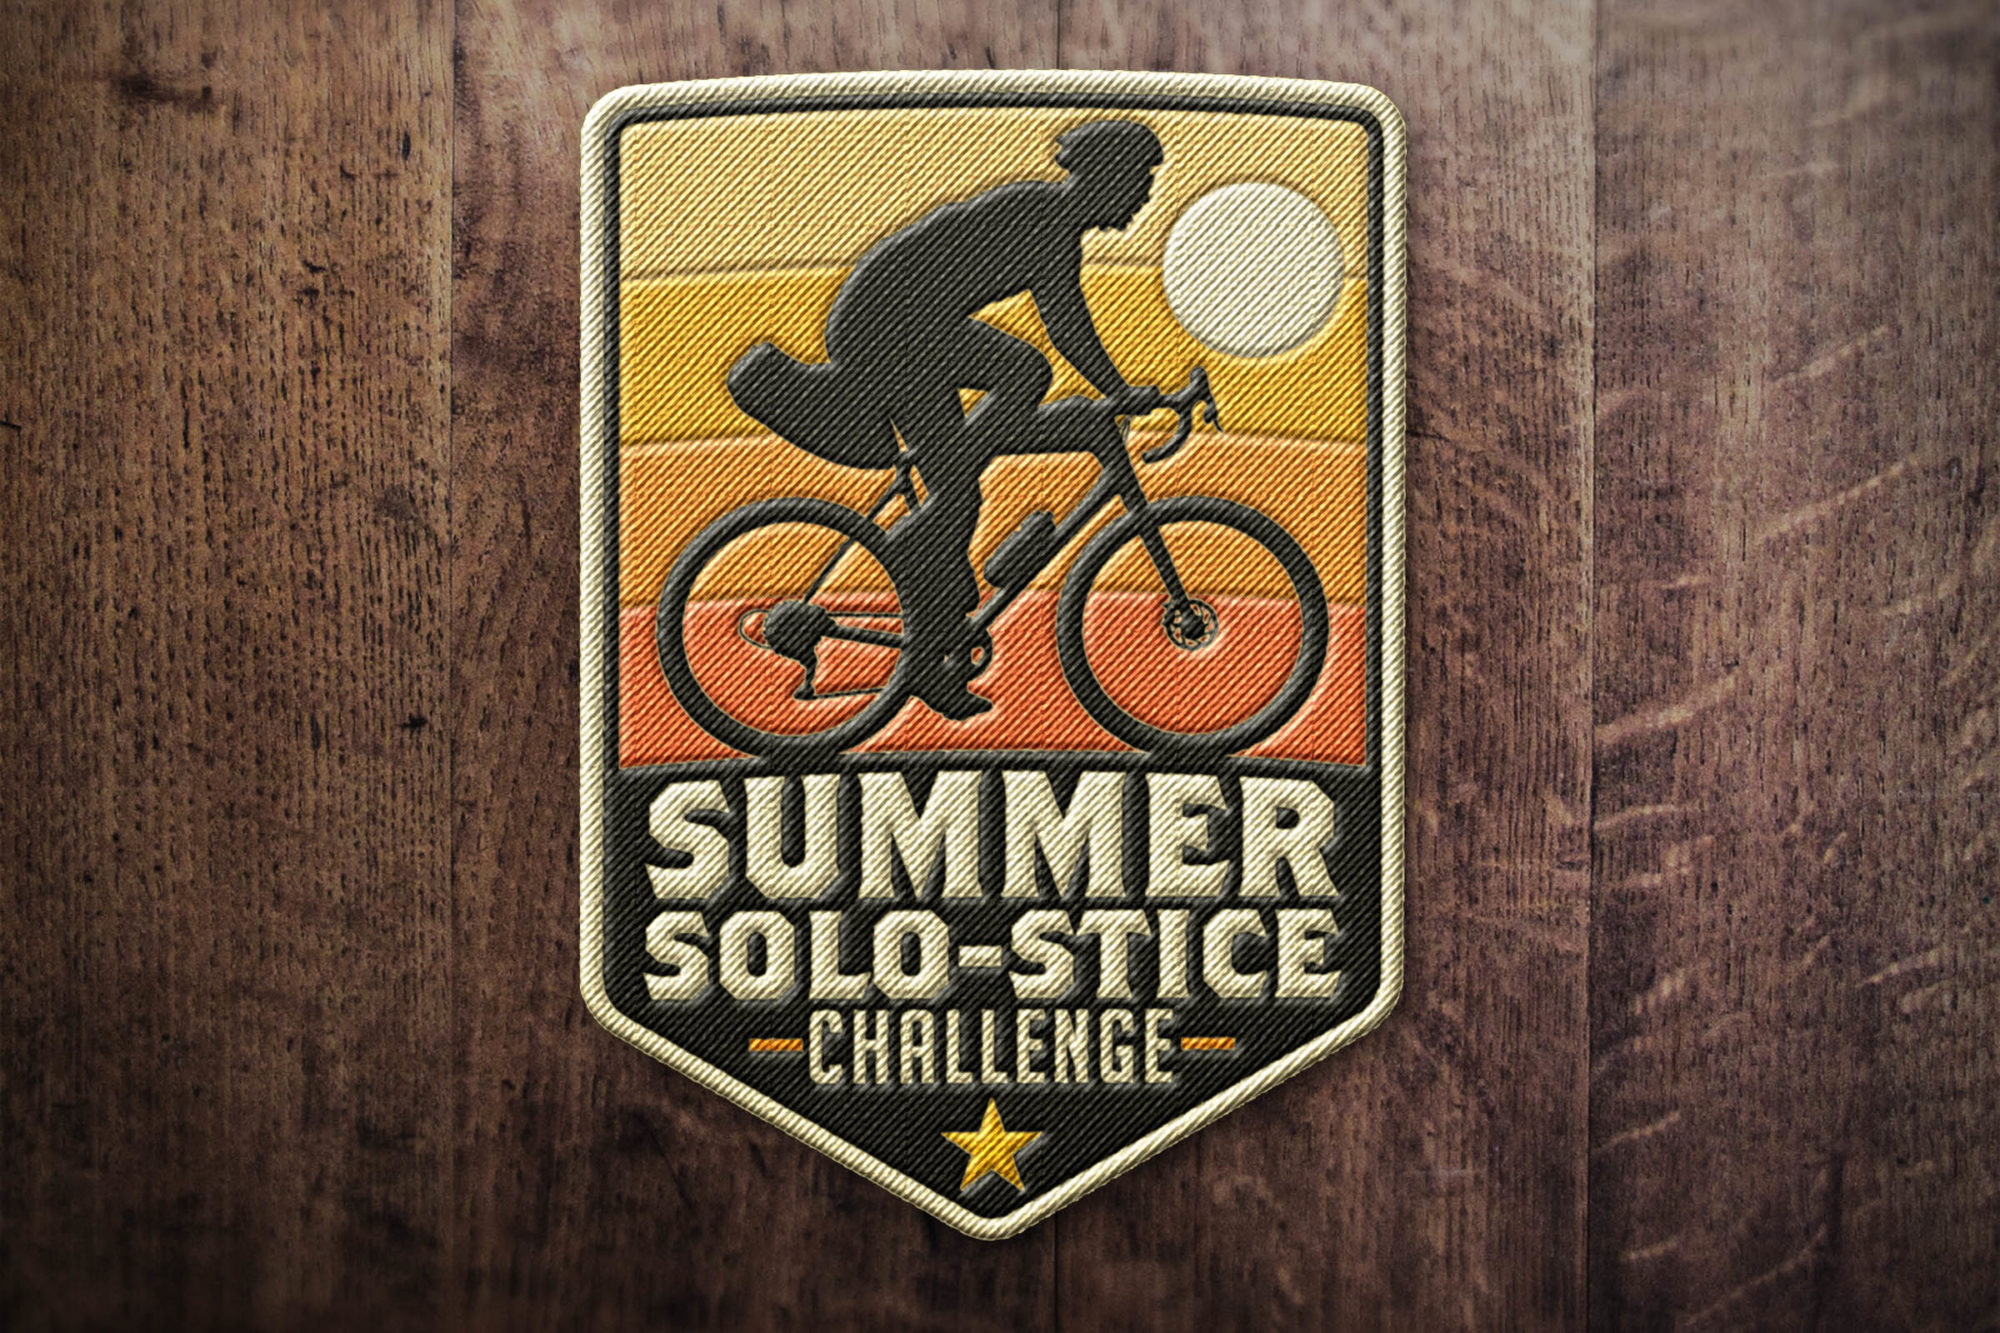 Summer Solo-Stice Challenge